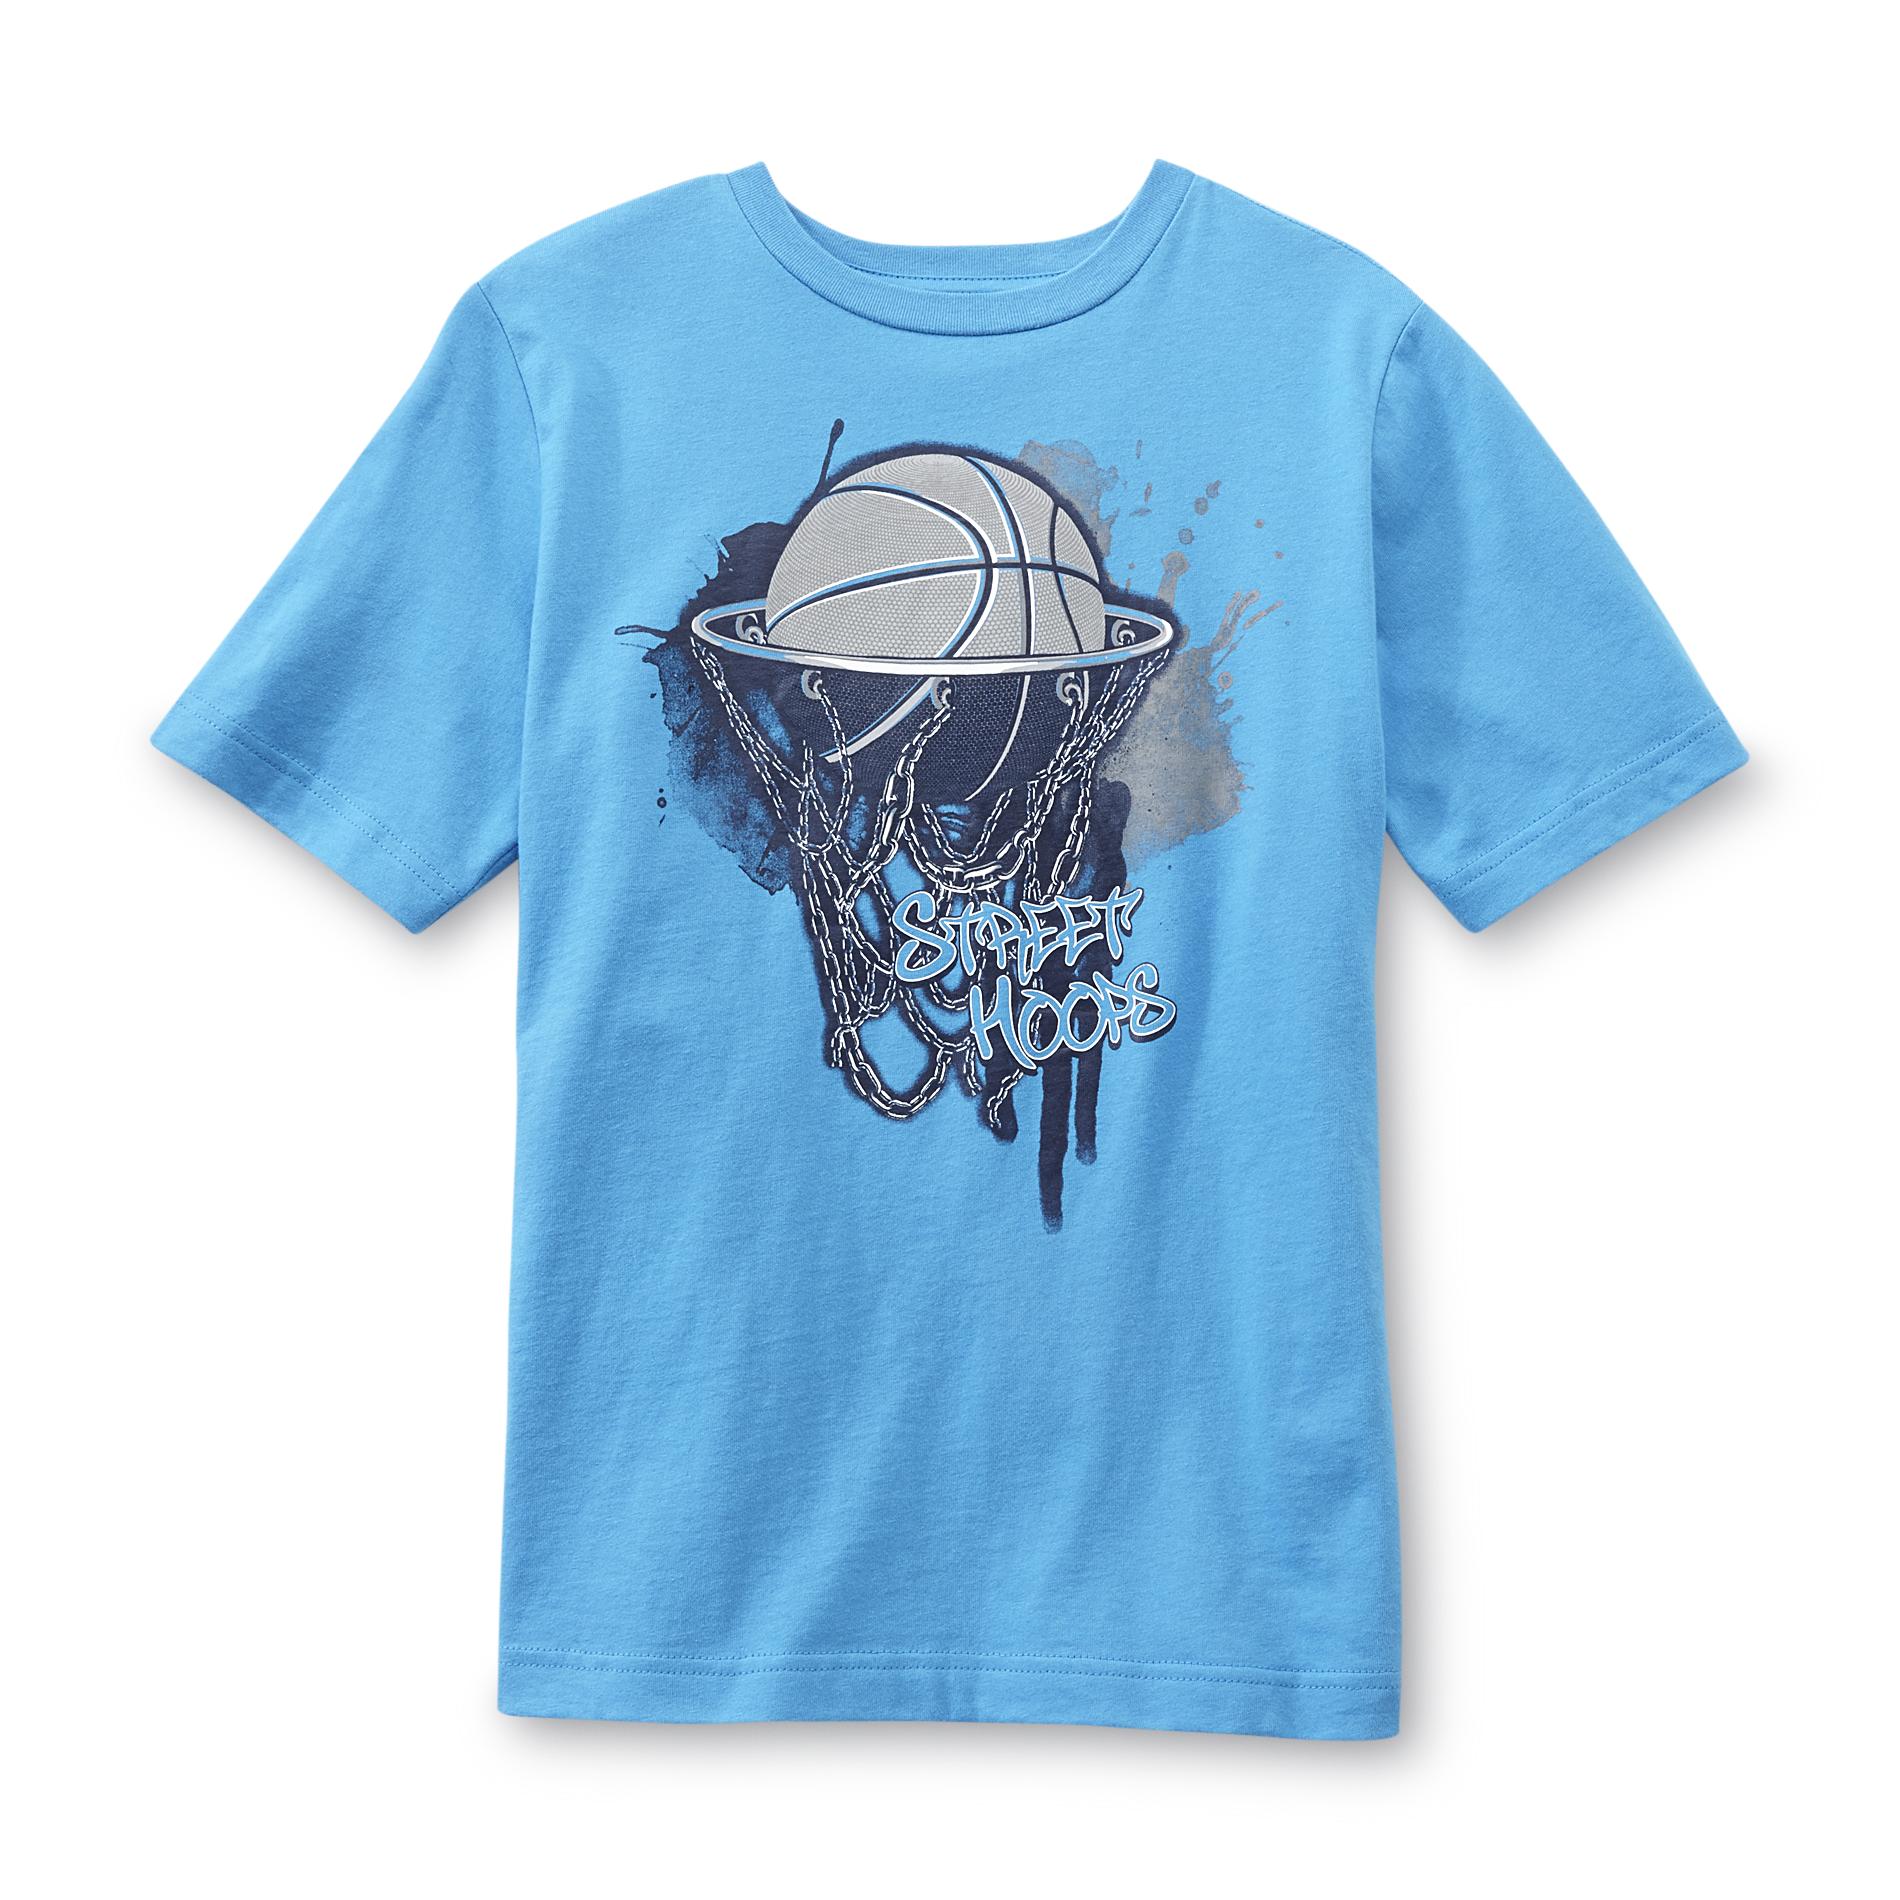 Athletech Boy's Graphic T-Shirt - Basketball